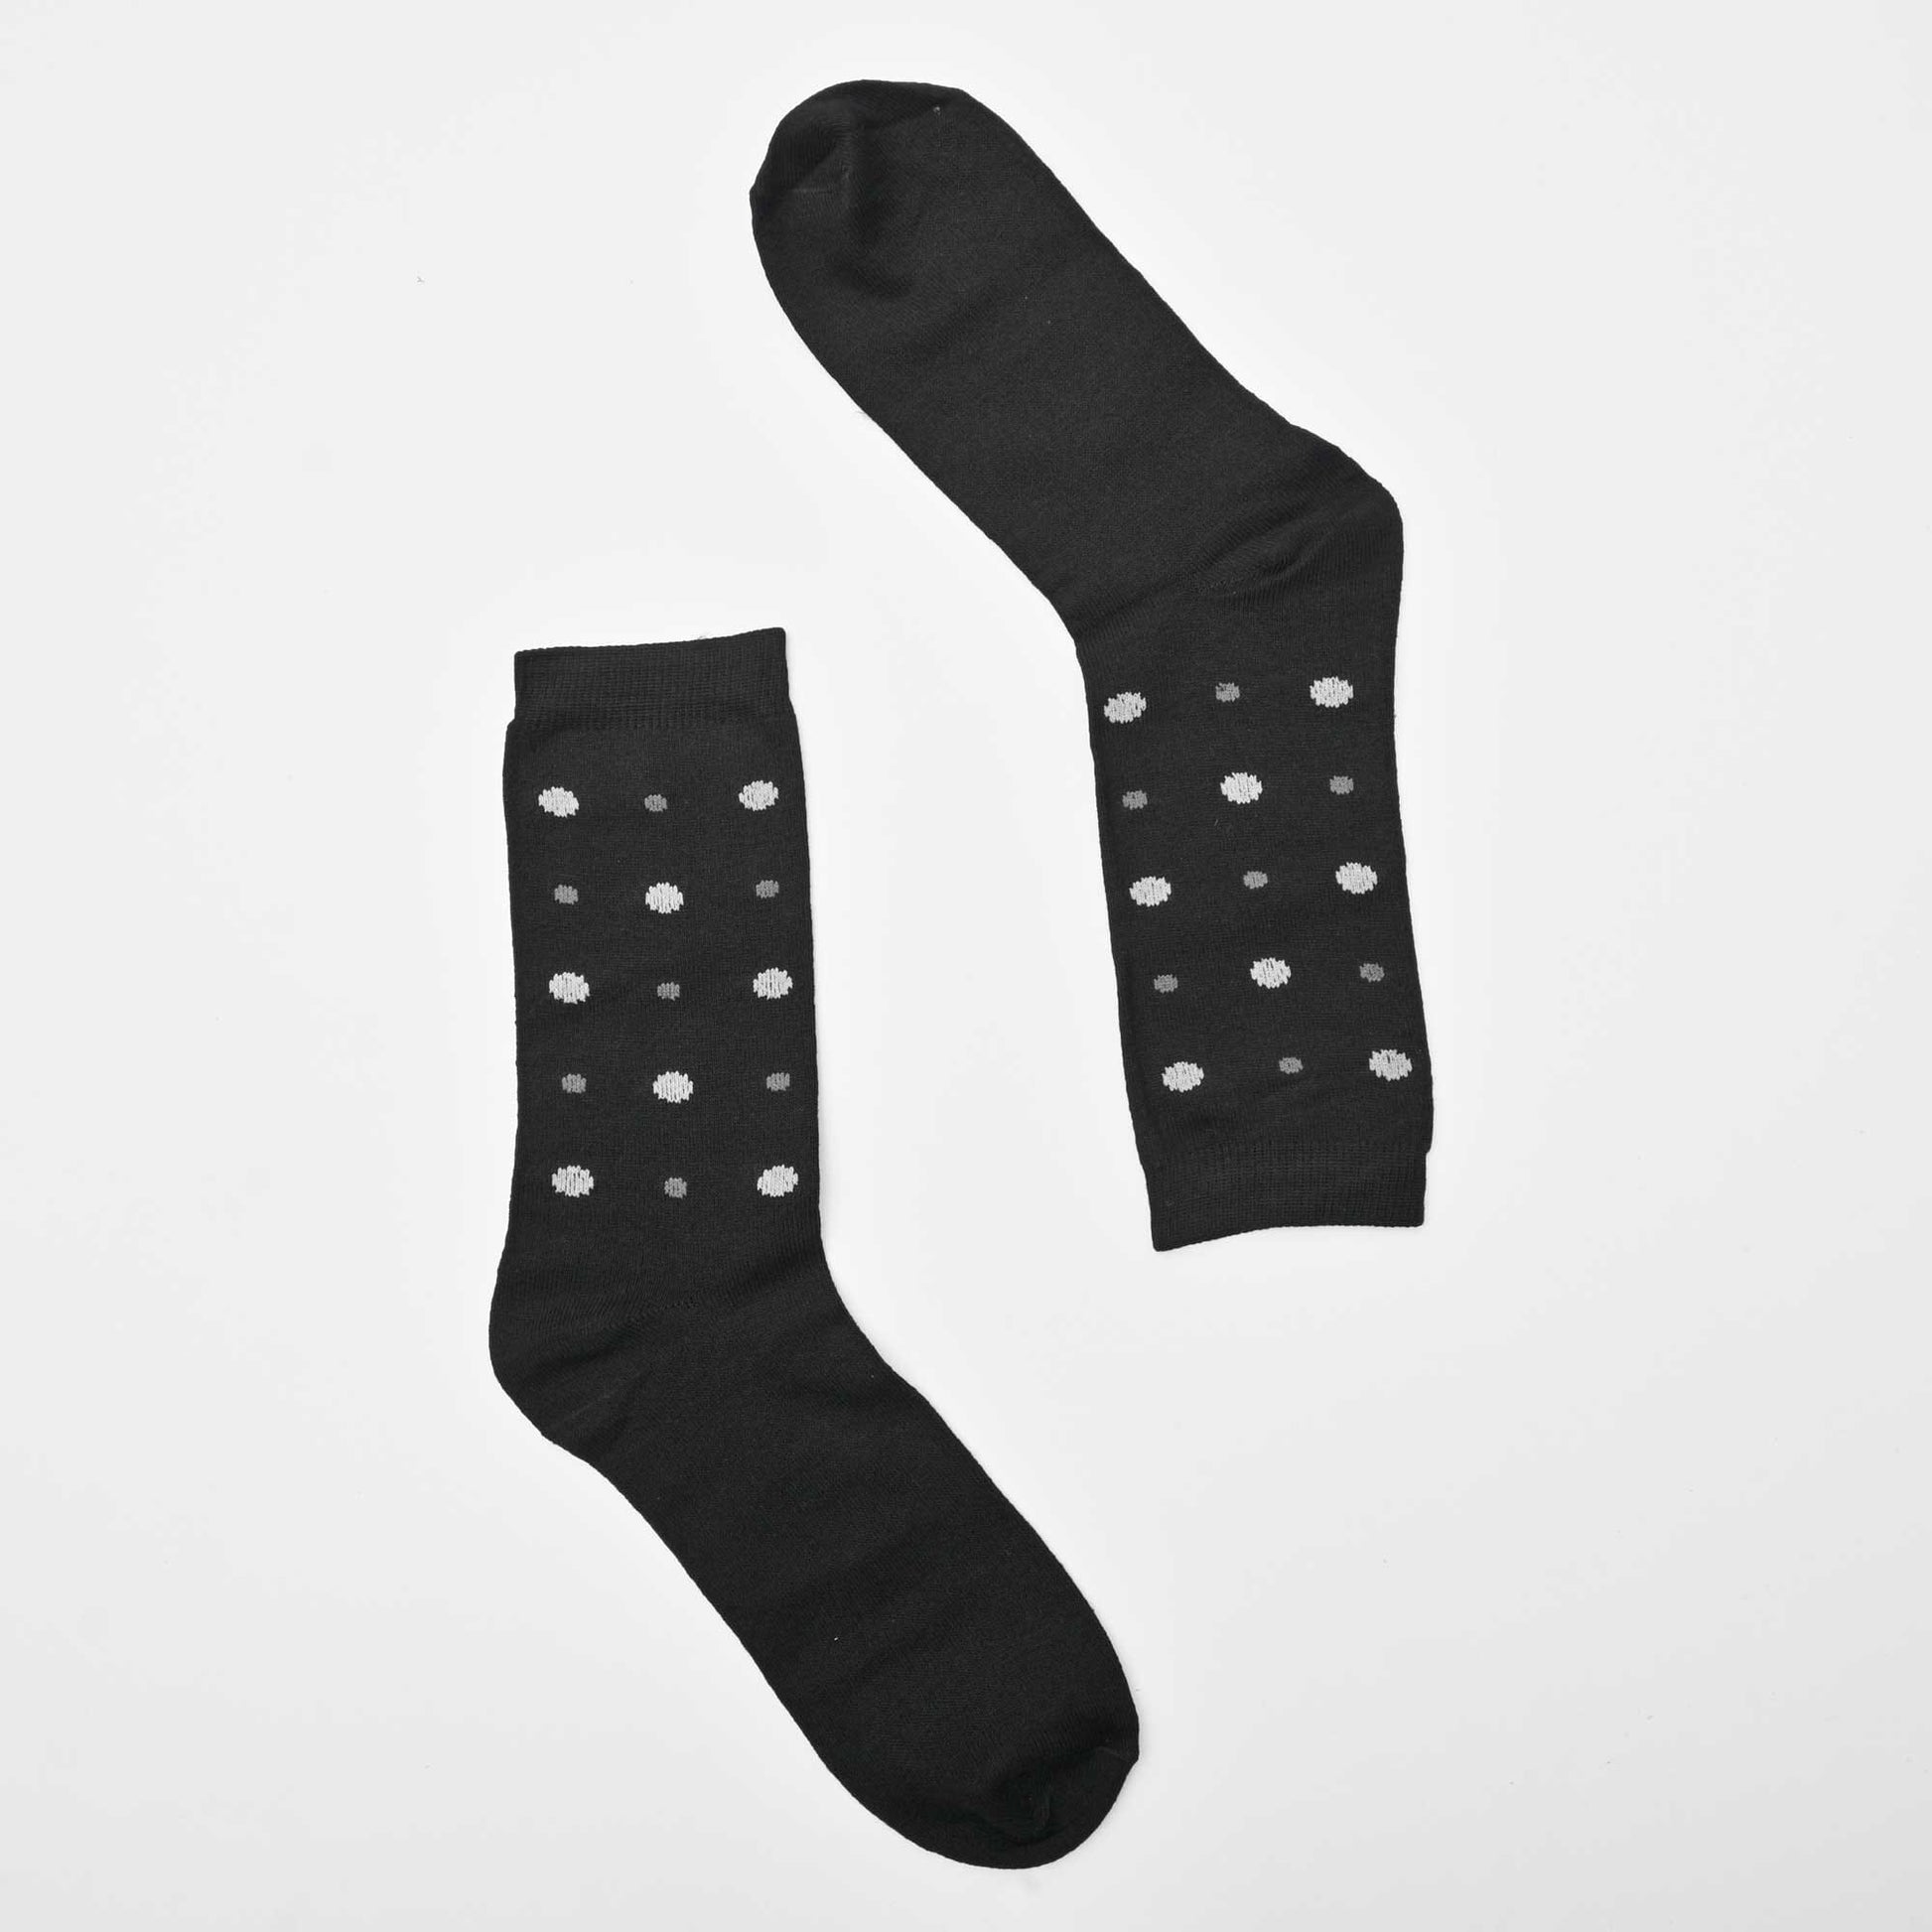 KLV Men's Algadon Classic Crew Socks Socks RAM Black D6 EUR 40-46